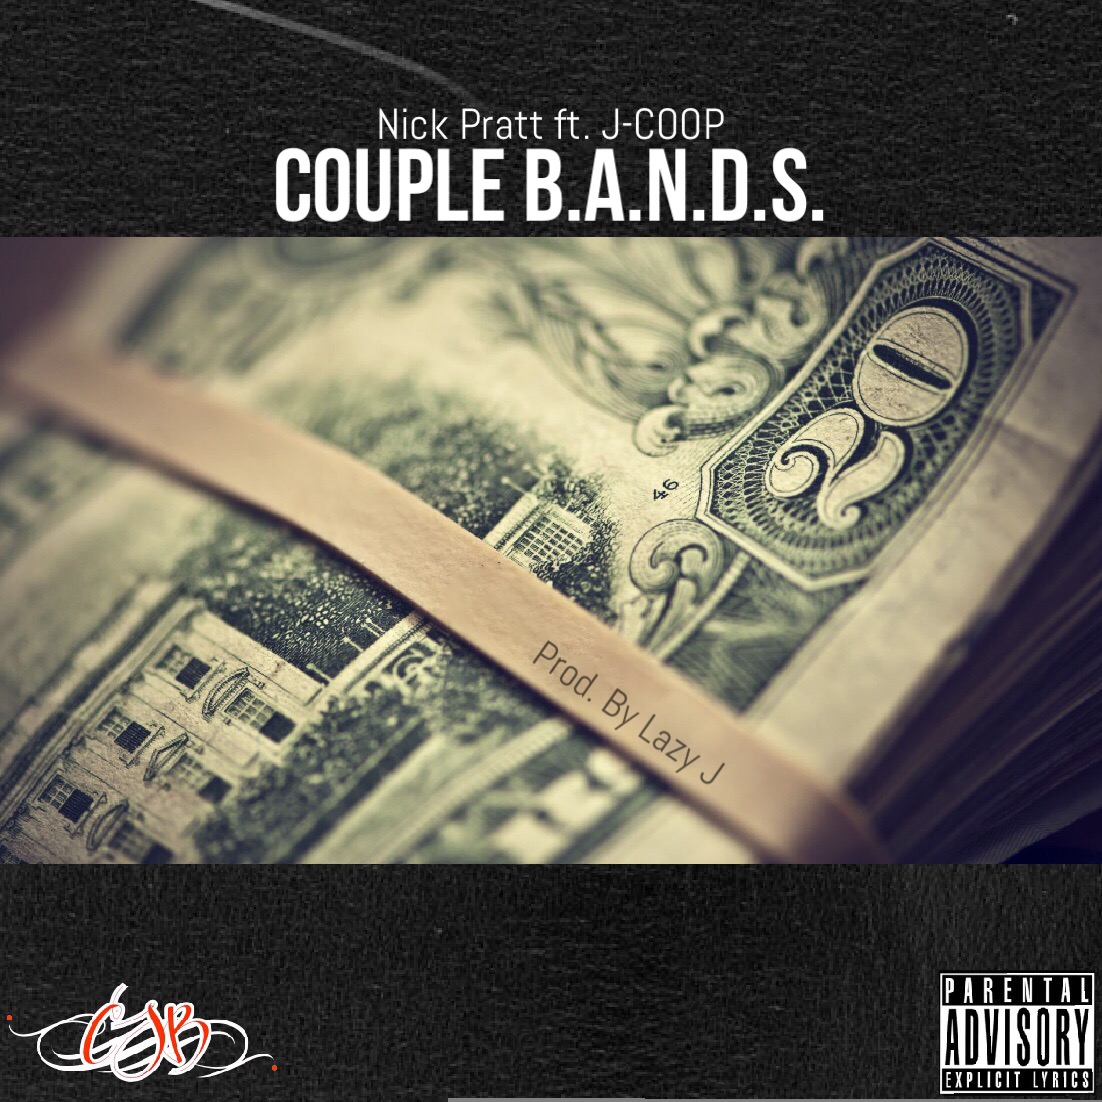 Nick Pratt – “Couple B.A.N.D.S.” Feat. J-Coop